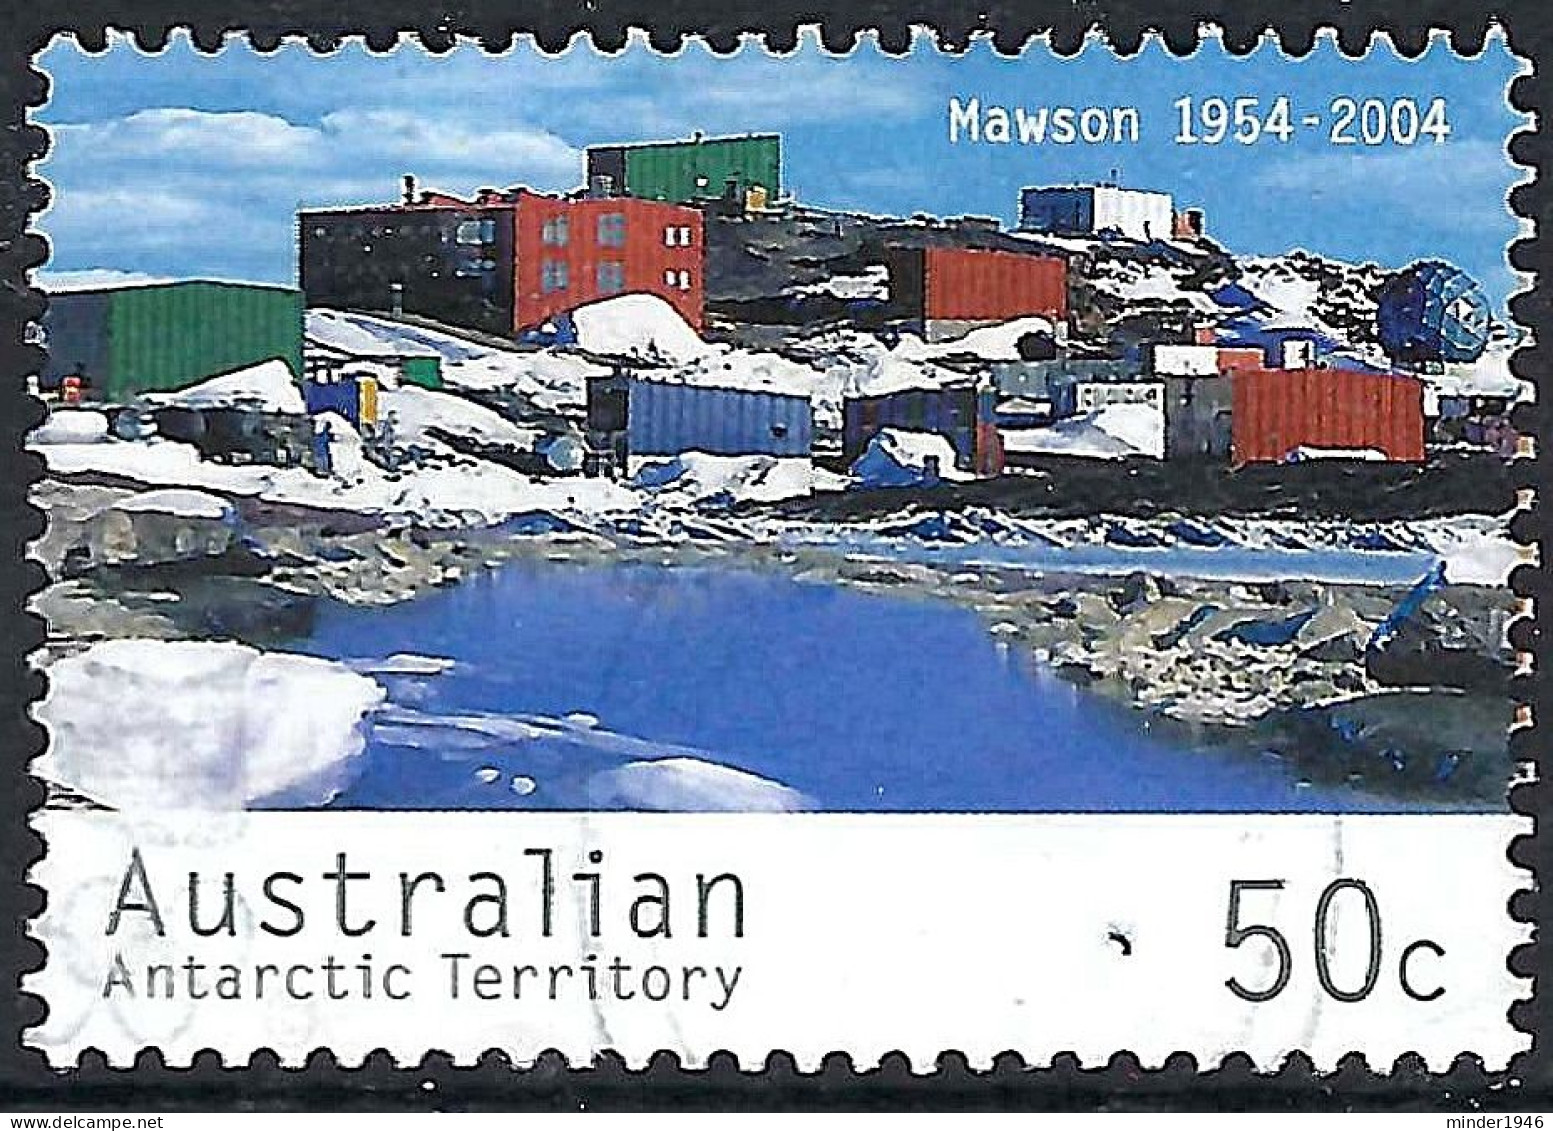 AUSTRALIAN ANTARCTIC TERRITORY (AAT) 2004 50c, Multicoloured, 50th Anniversary Mawson Station-Mawson Station FU - Gebraucht